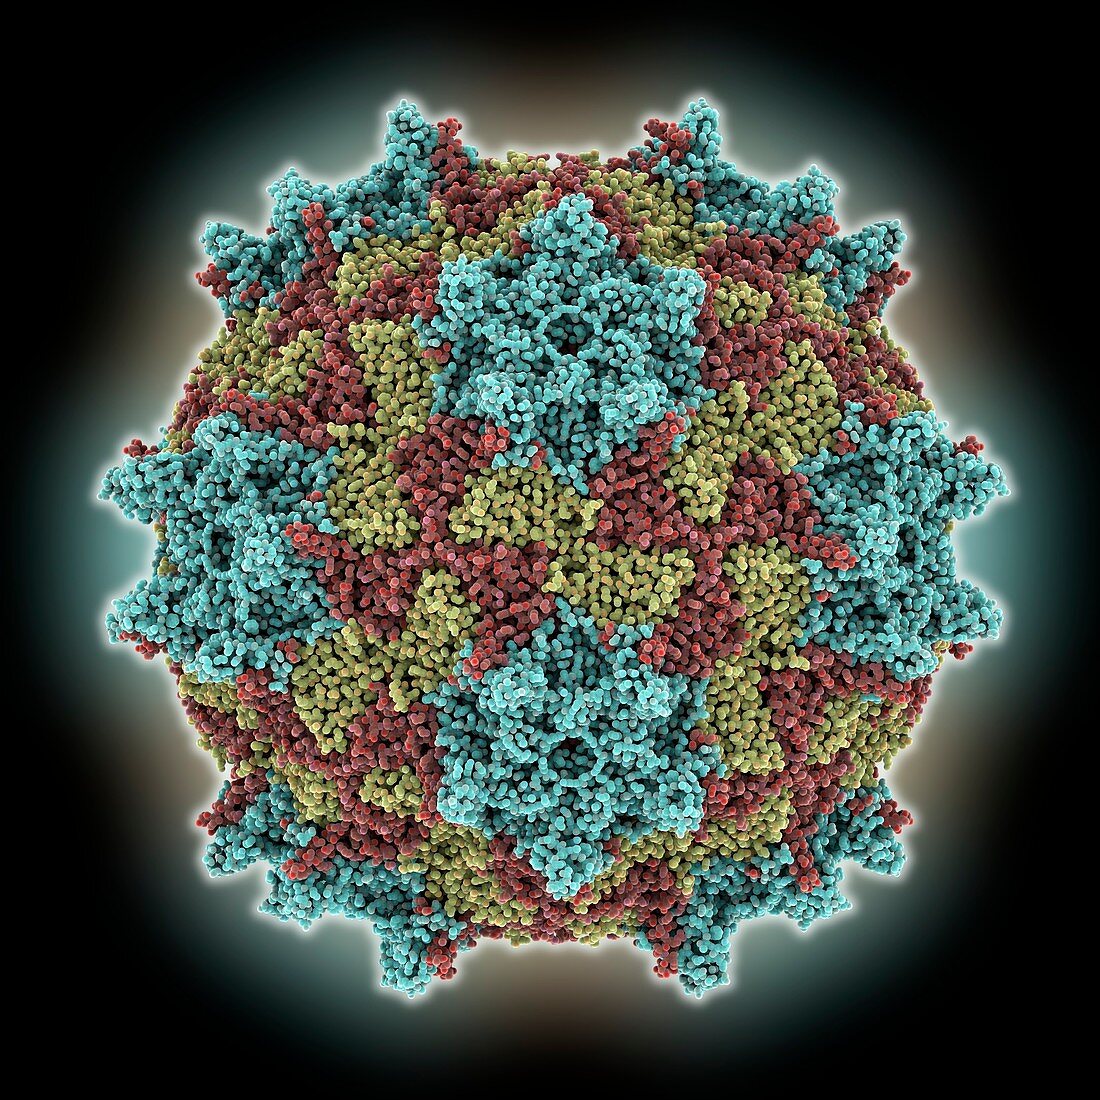 Black queen cell virus capsid, molecular model